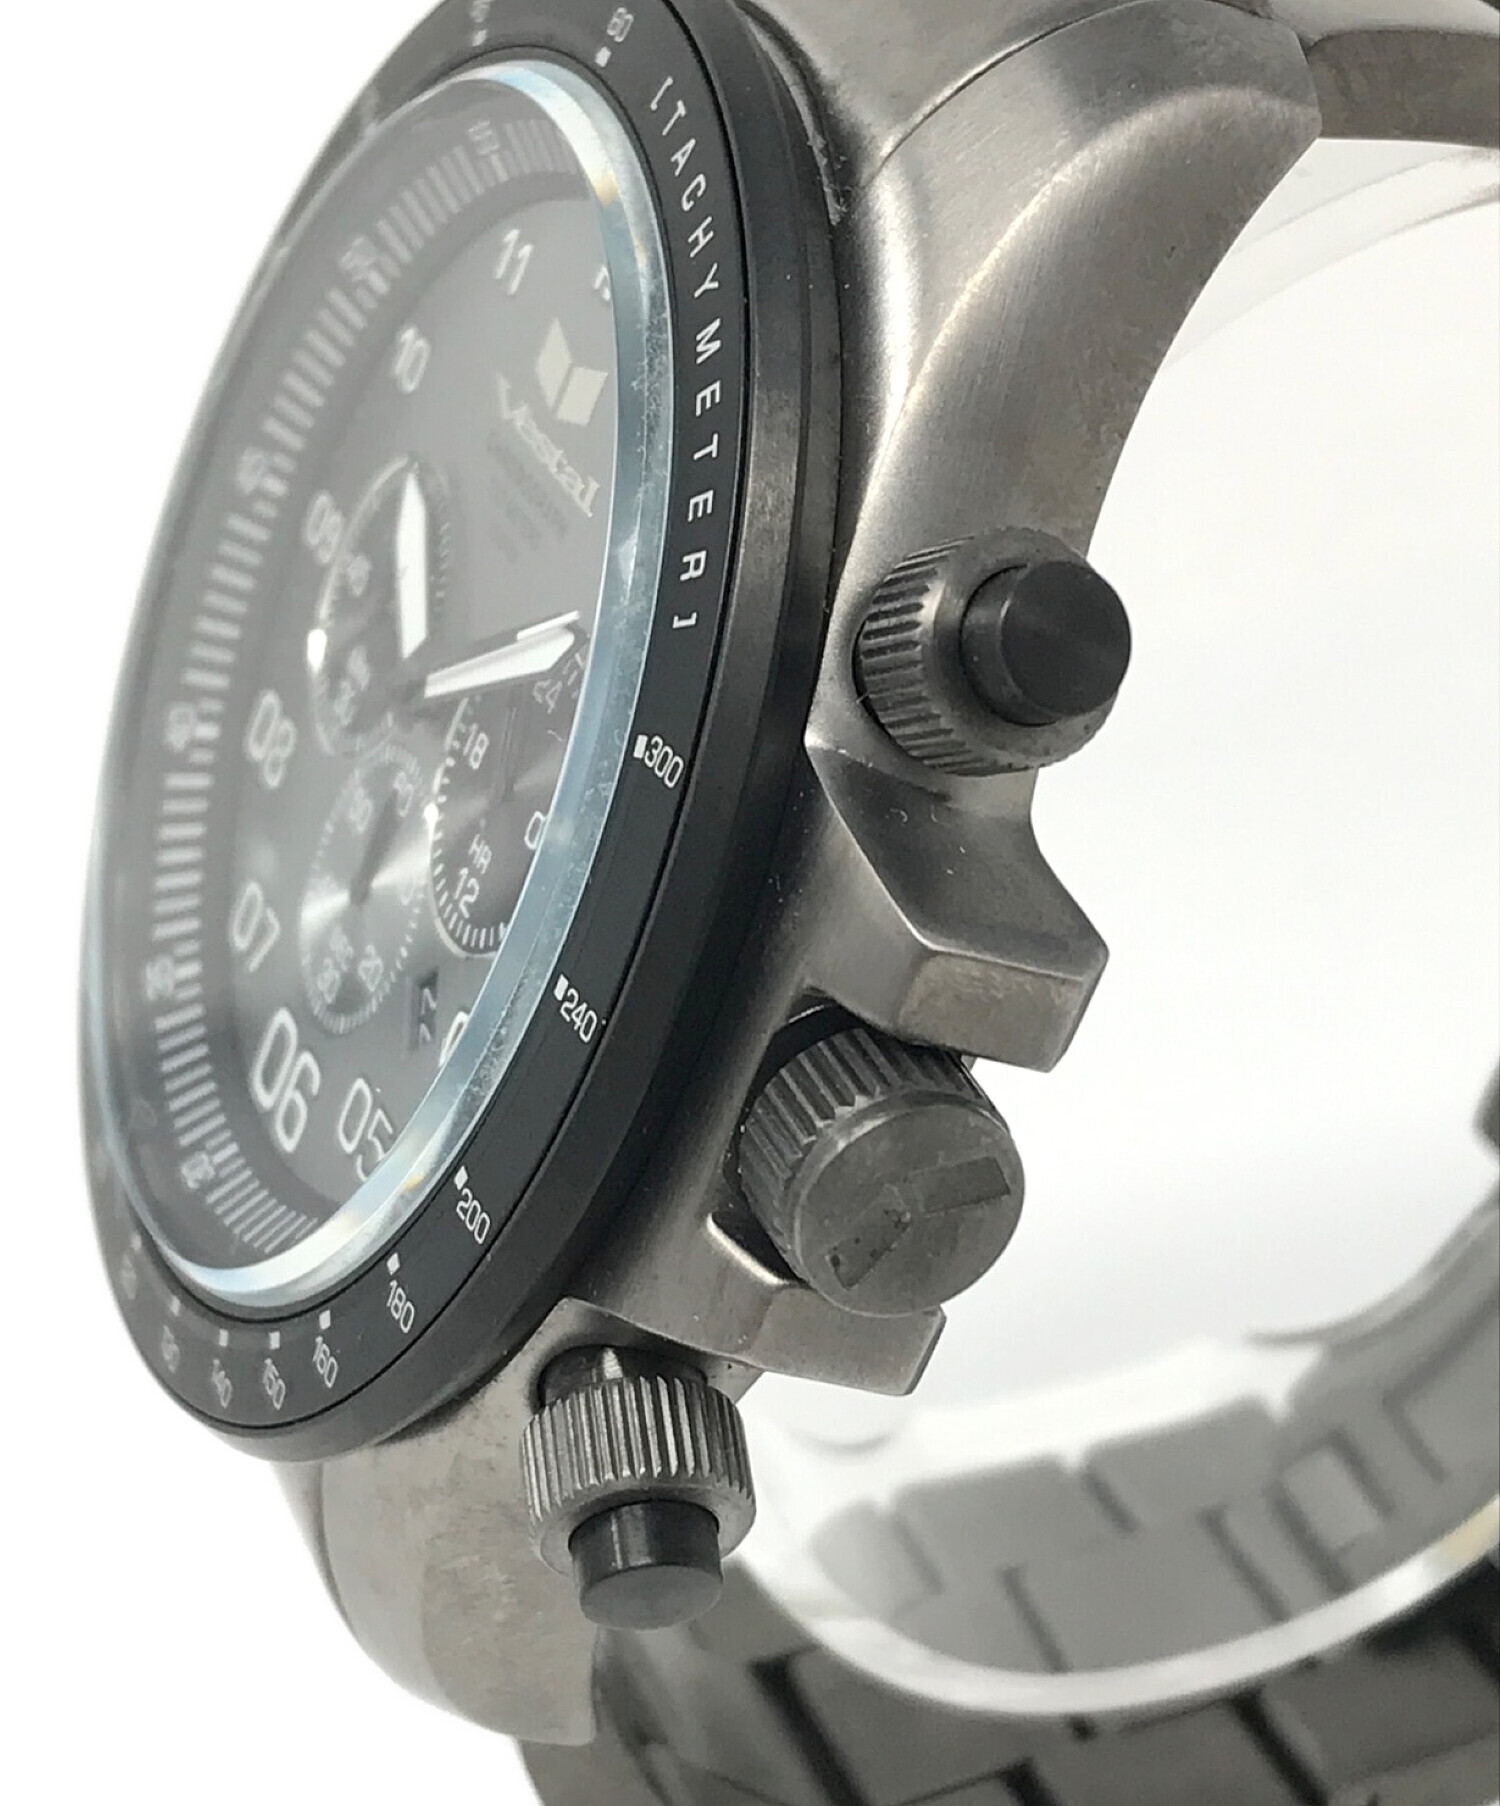 vestal (ベスタル) 腕時計 クォーツ サイズ:実寸サイズにてご確認ください。